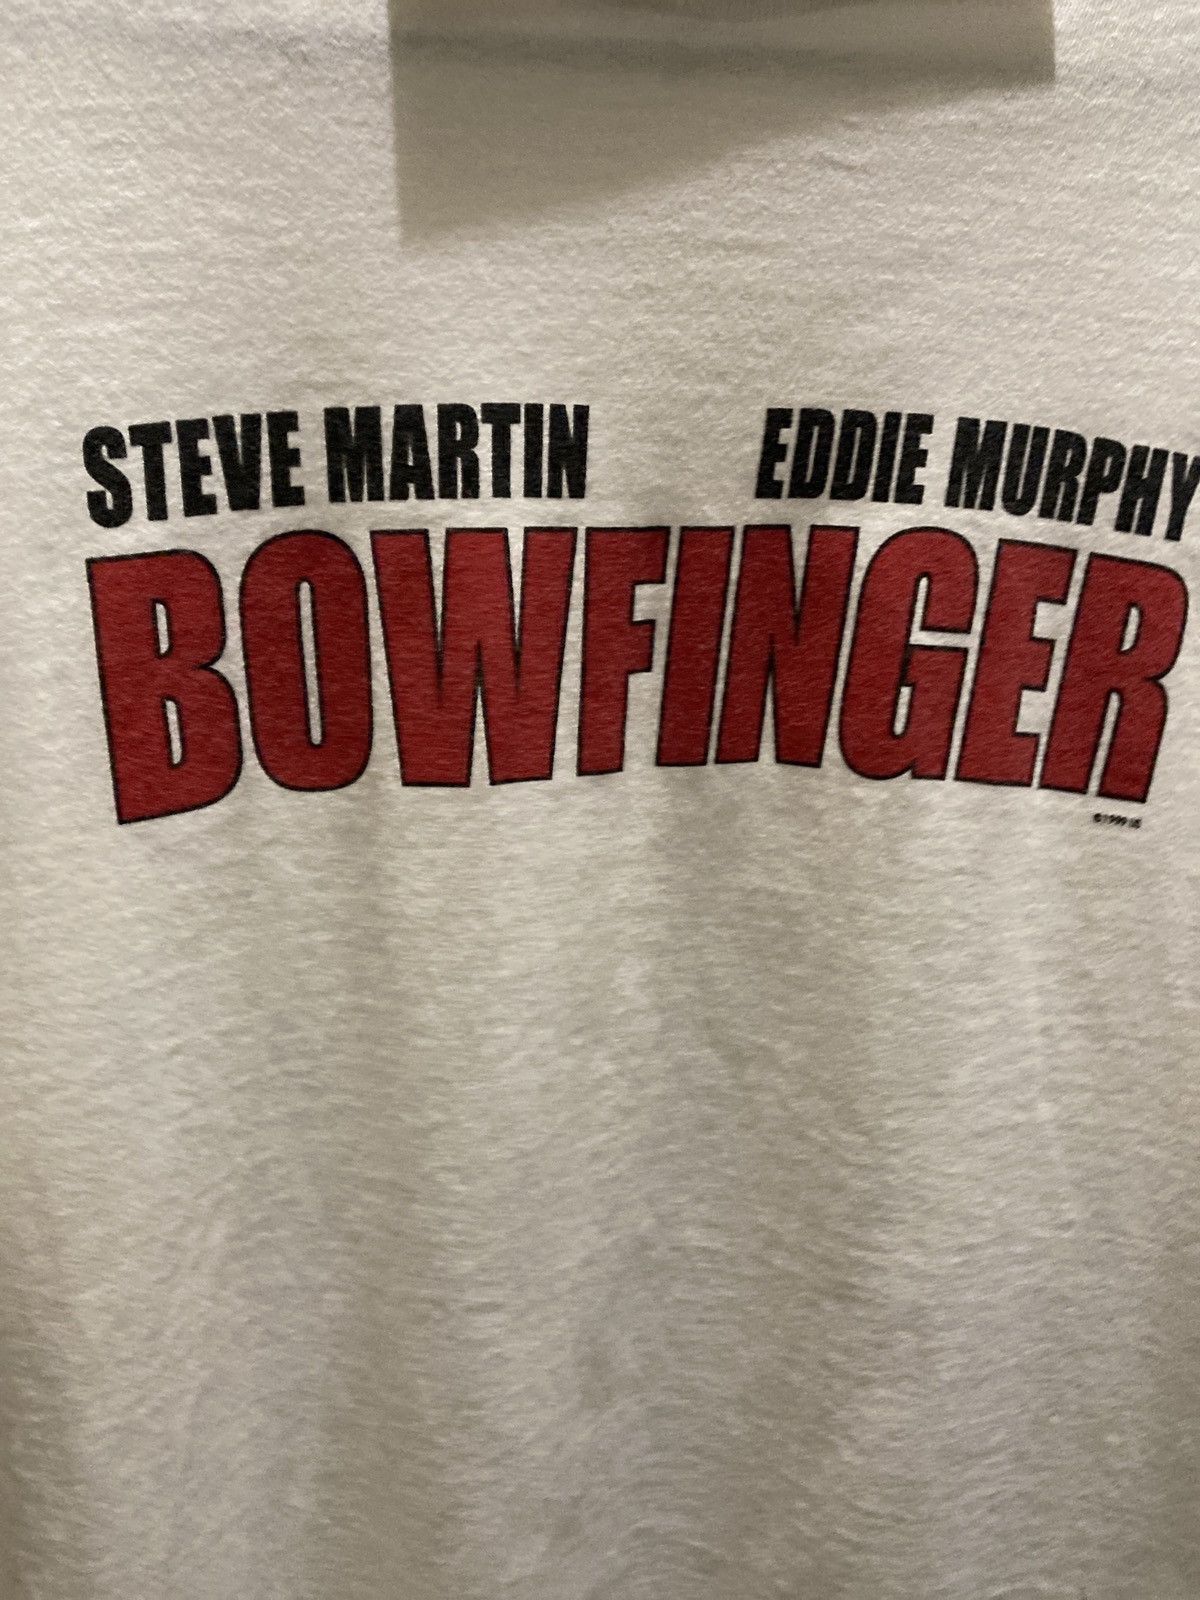 Vintage Vintage Movie Tee “Bowfinger” Eddie Murphy Steve Martin Size US XL / EU 56 / 4 - 5 Preview